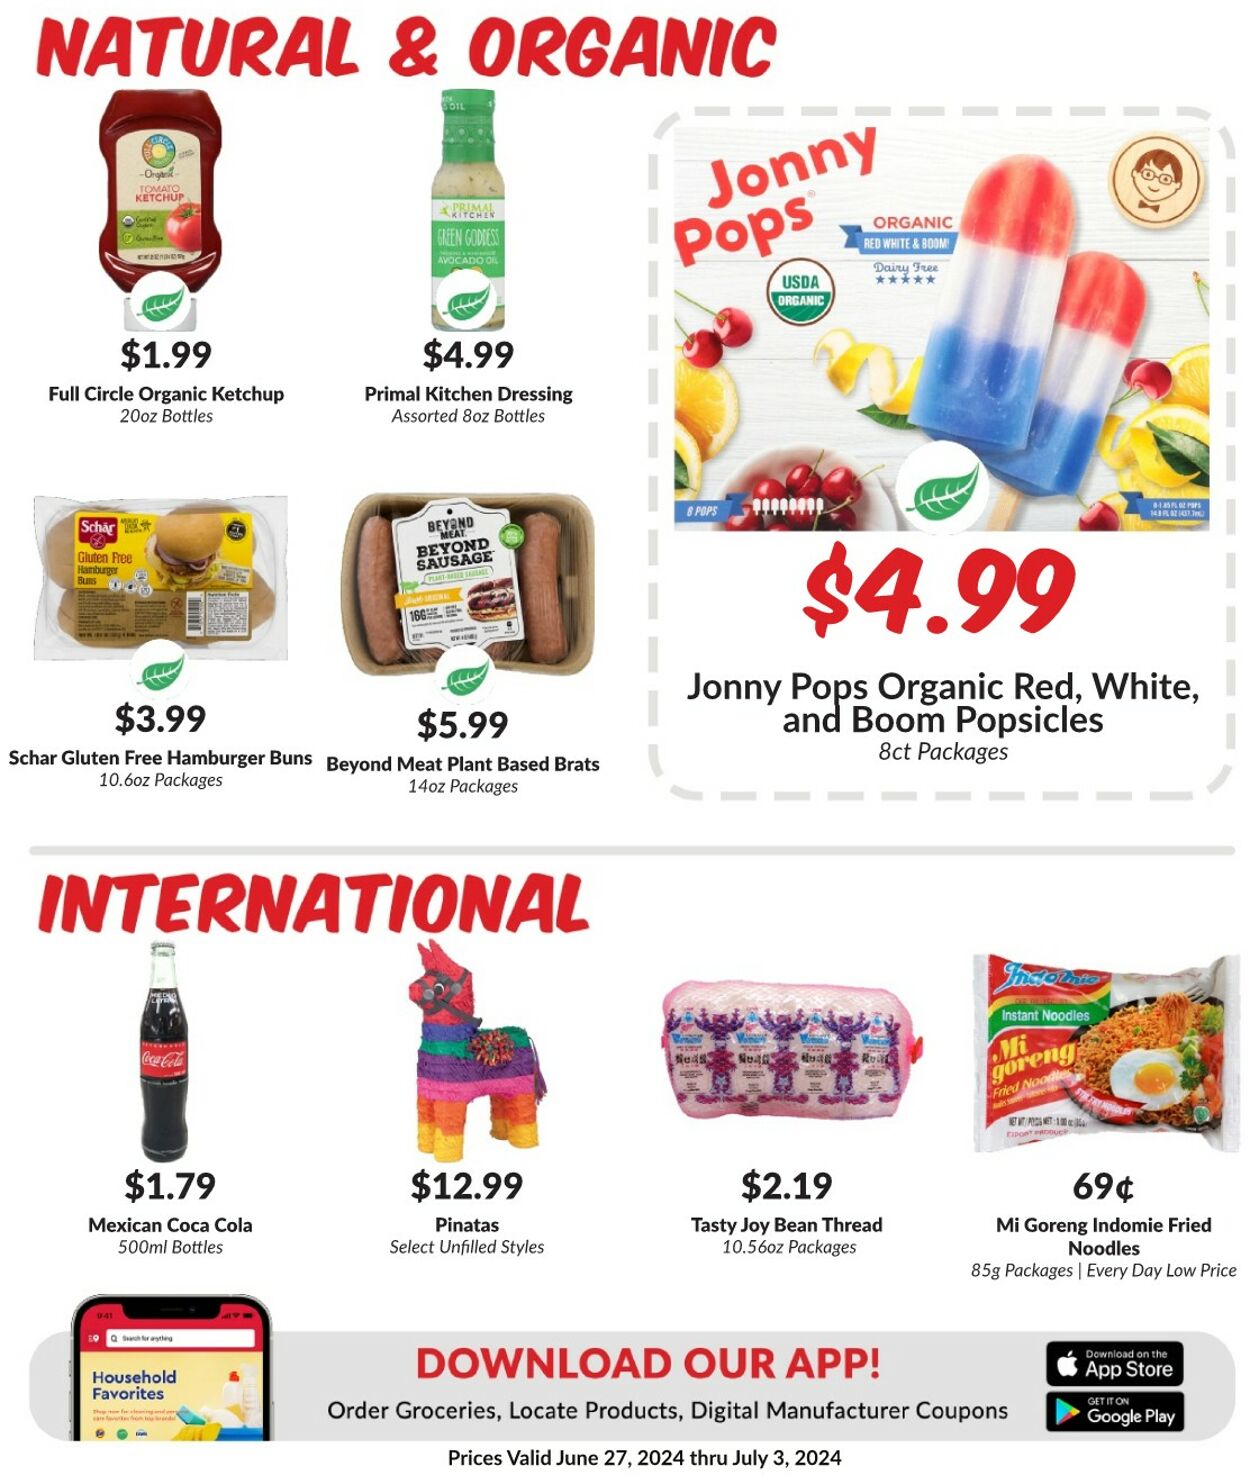 Weekly ad Woodman's Market 06/27/2024 - 07/03/2024